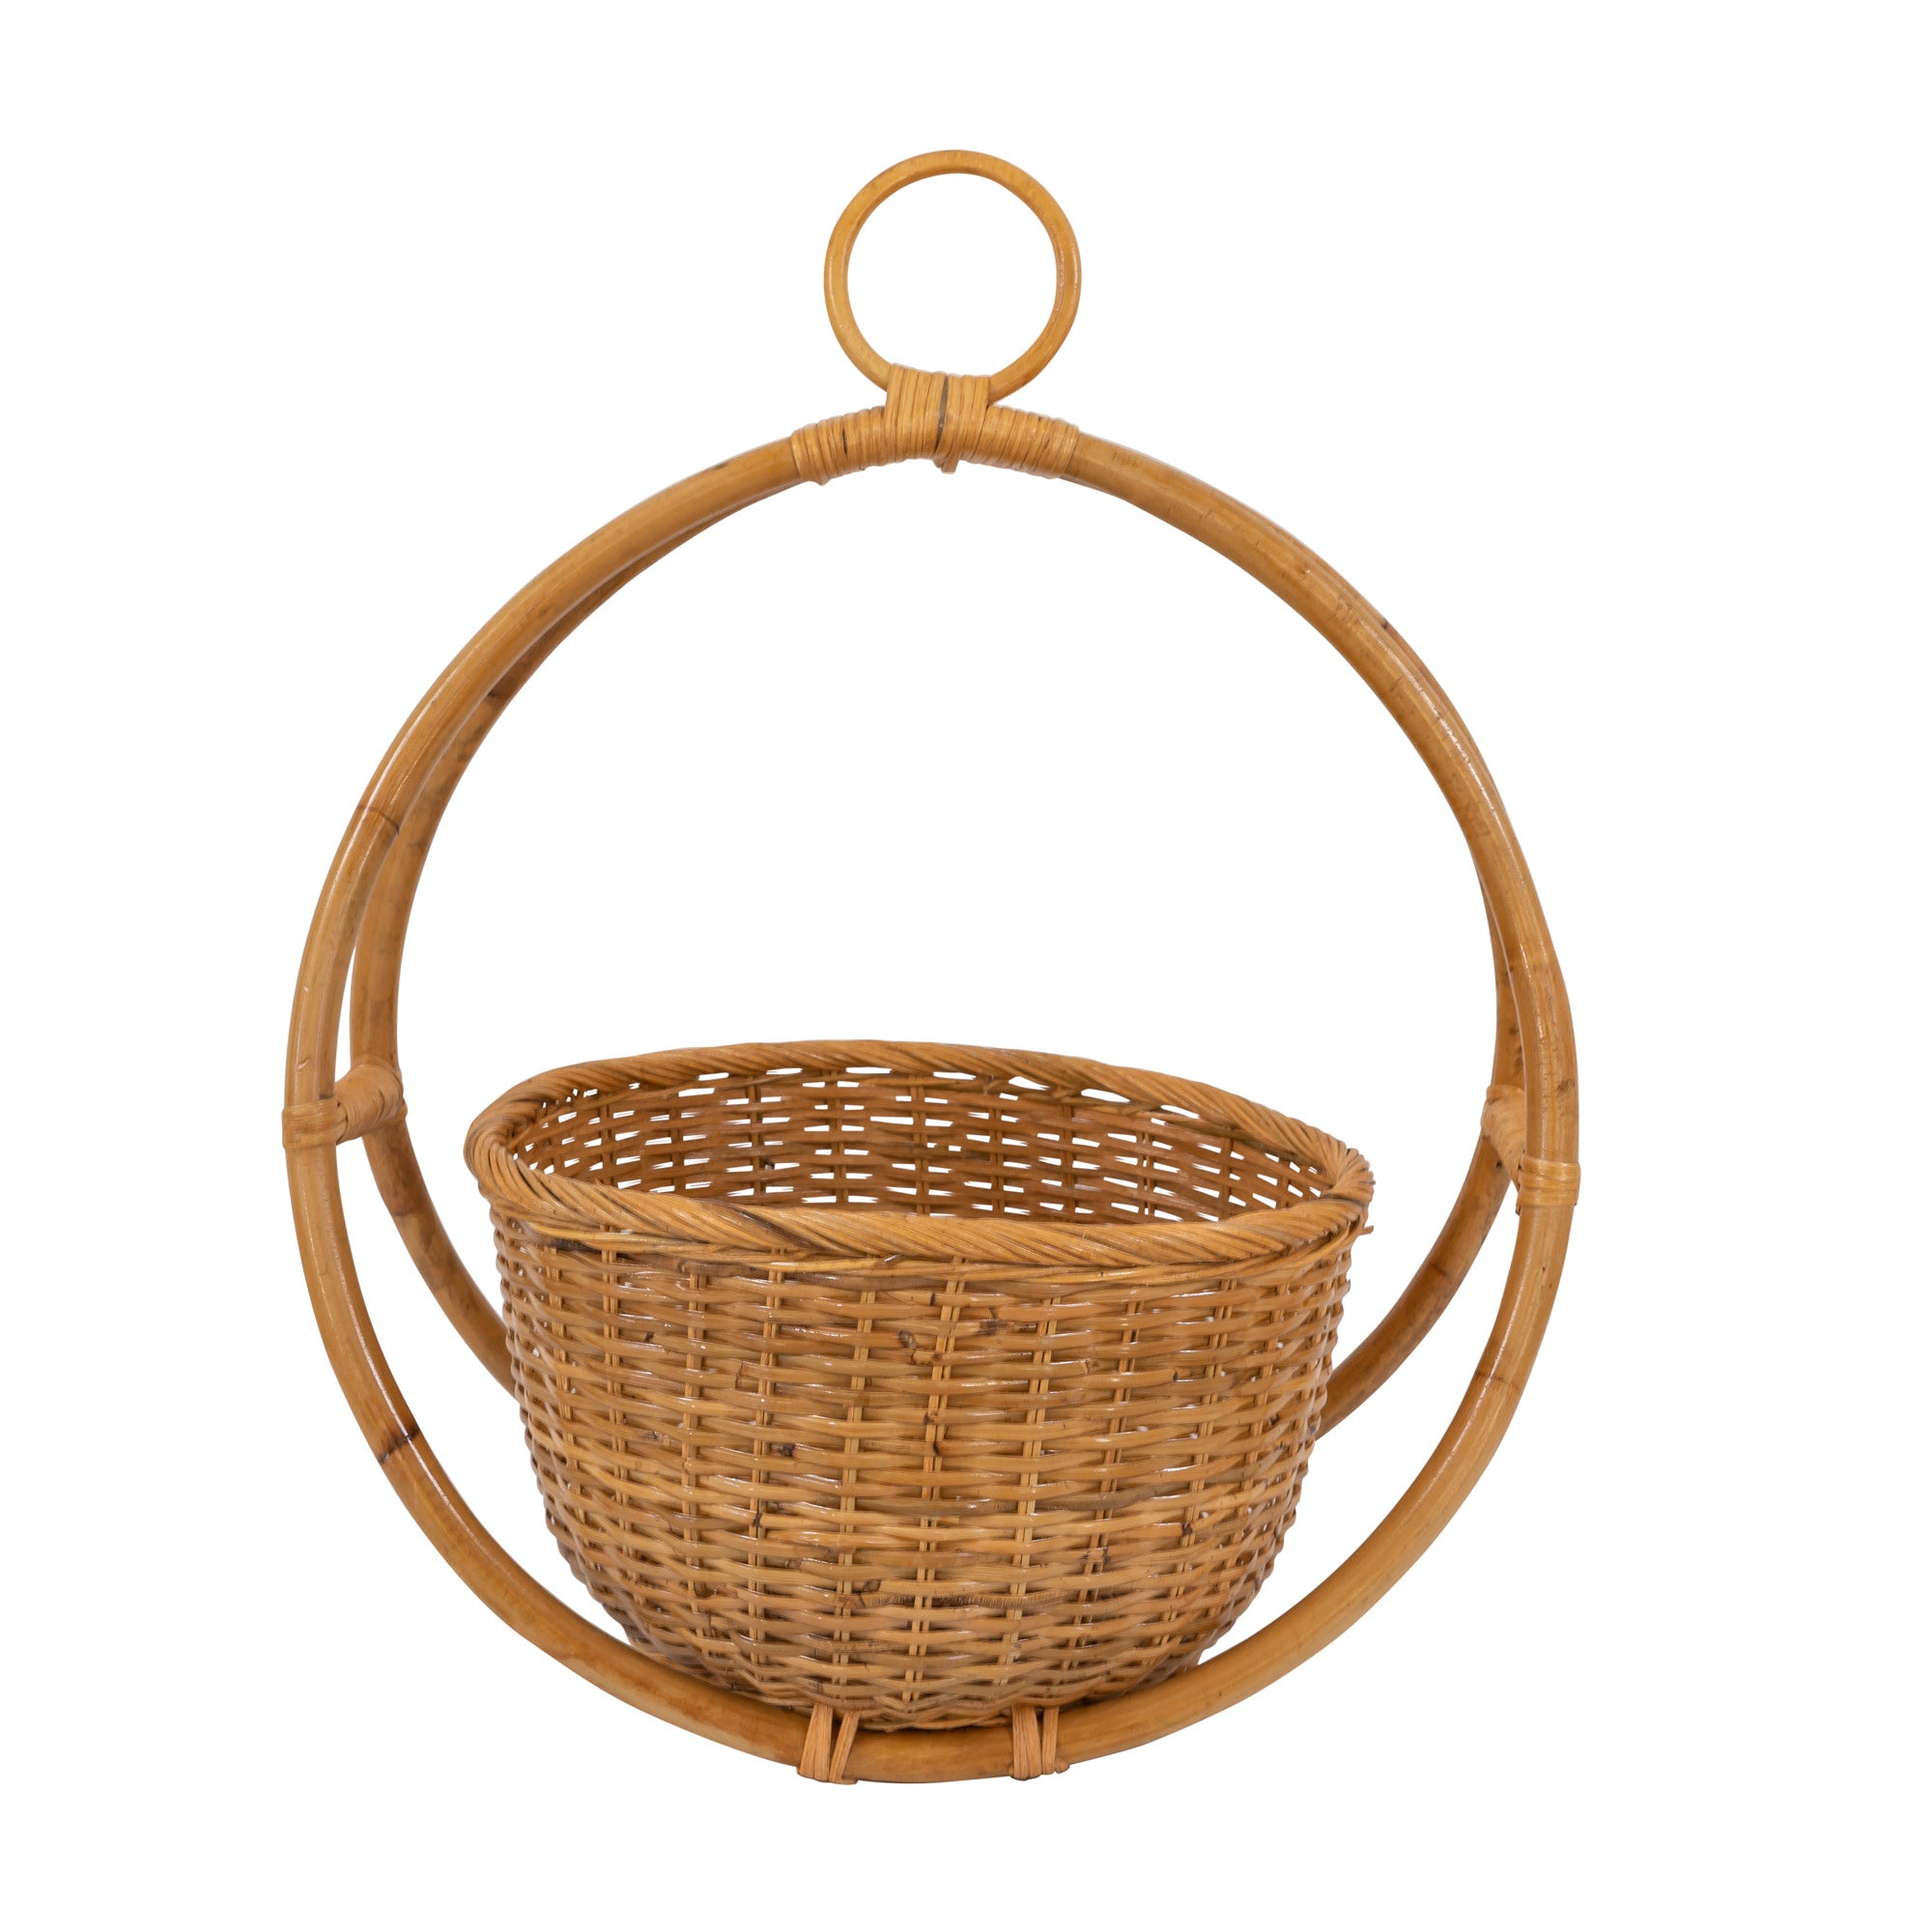 Rattan basket with unique circular framing